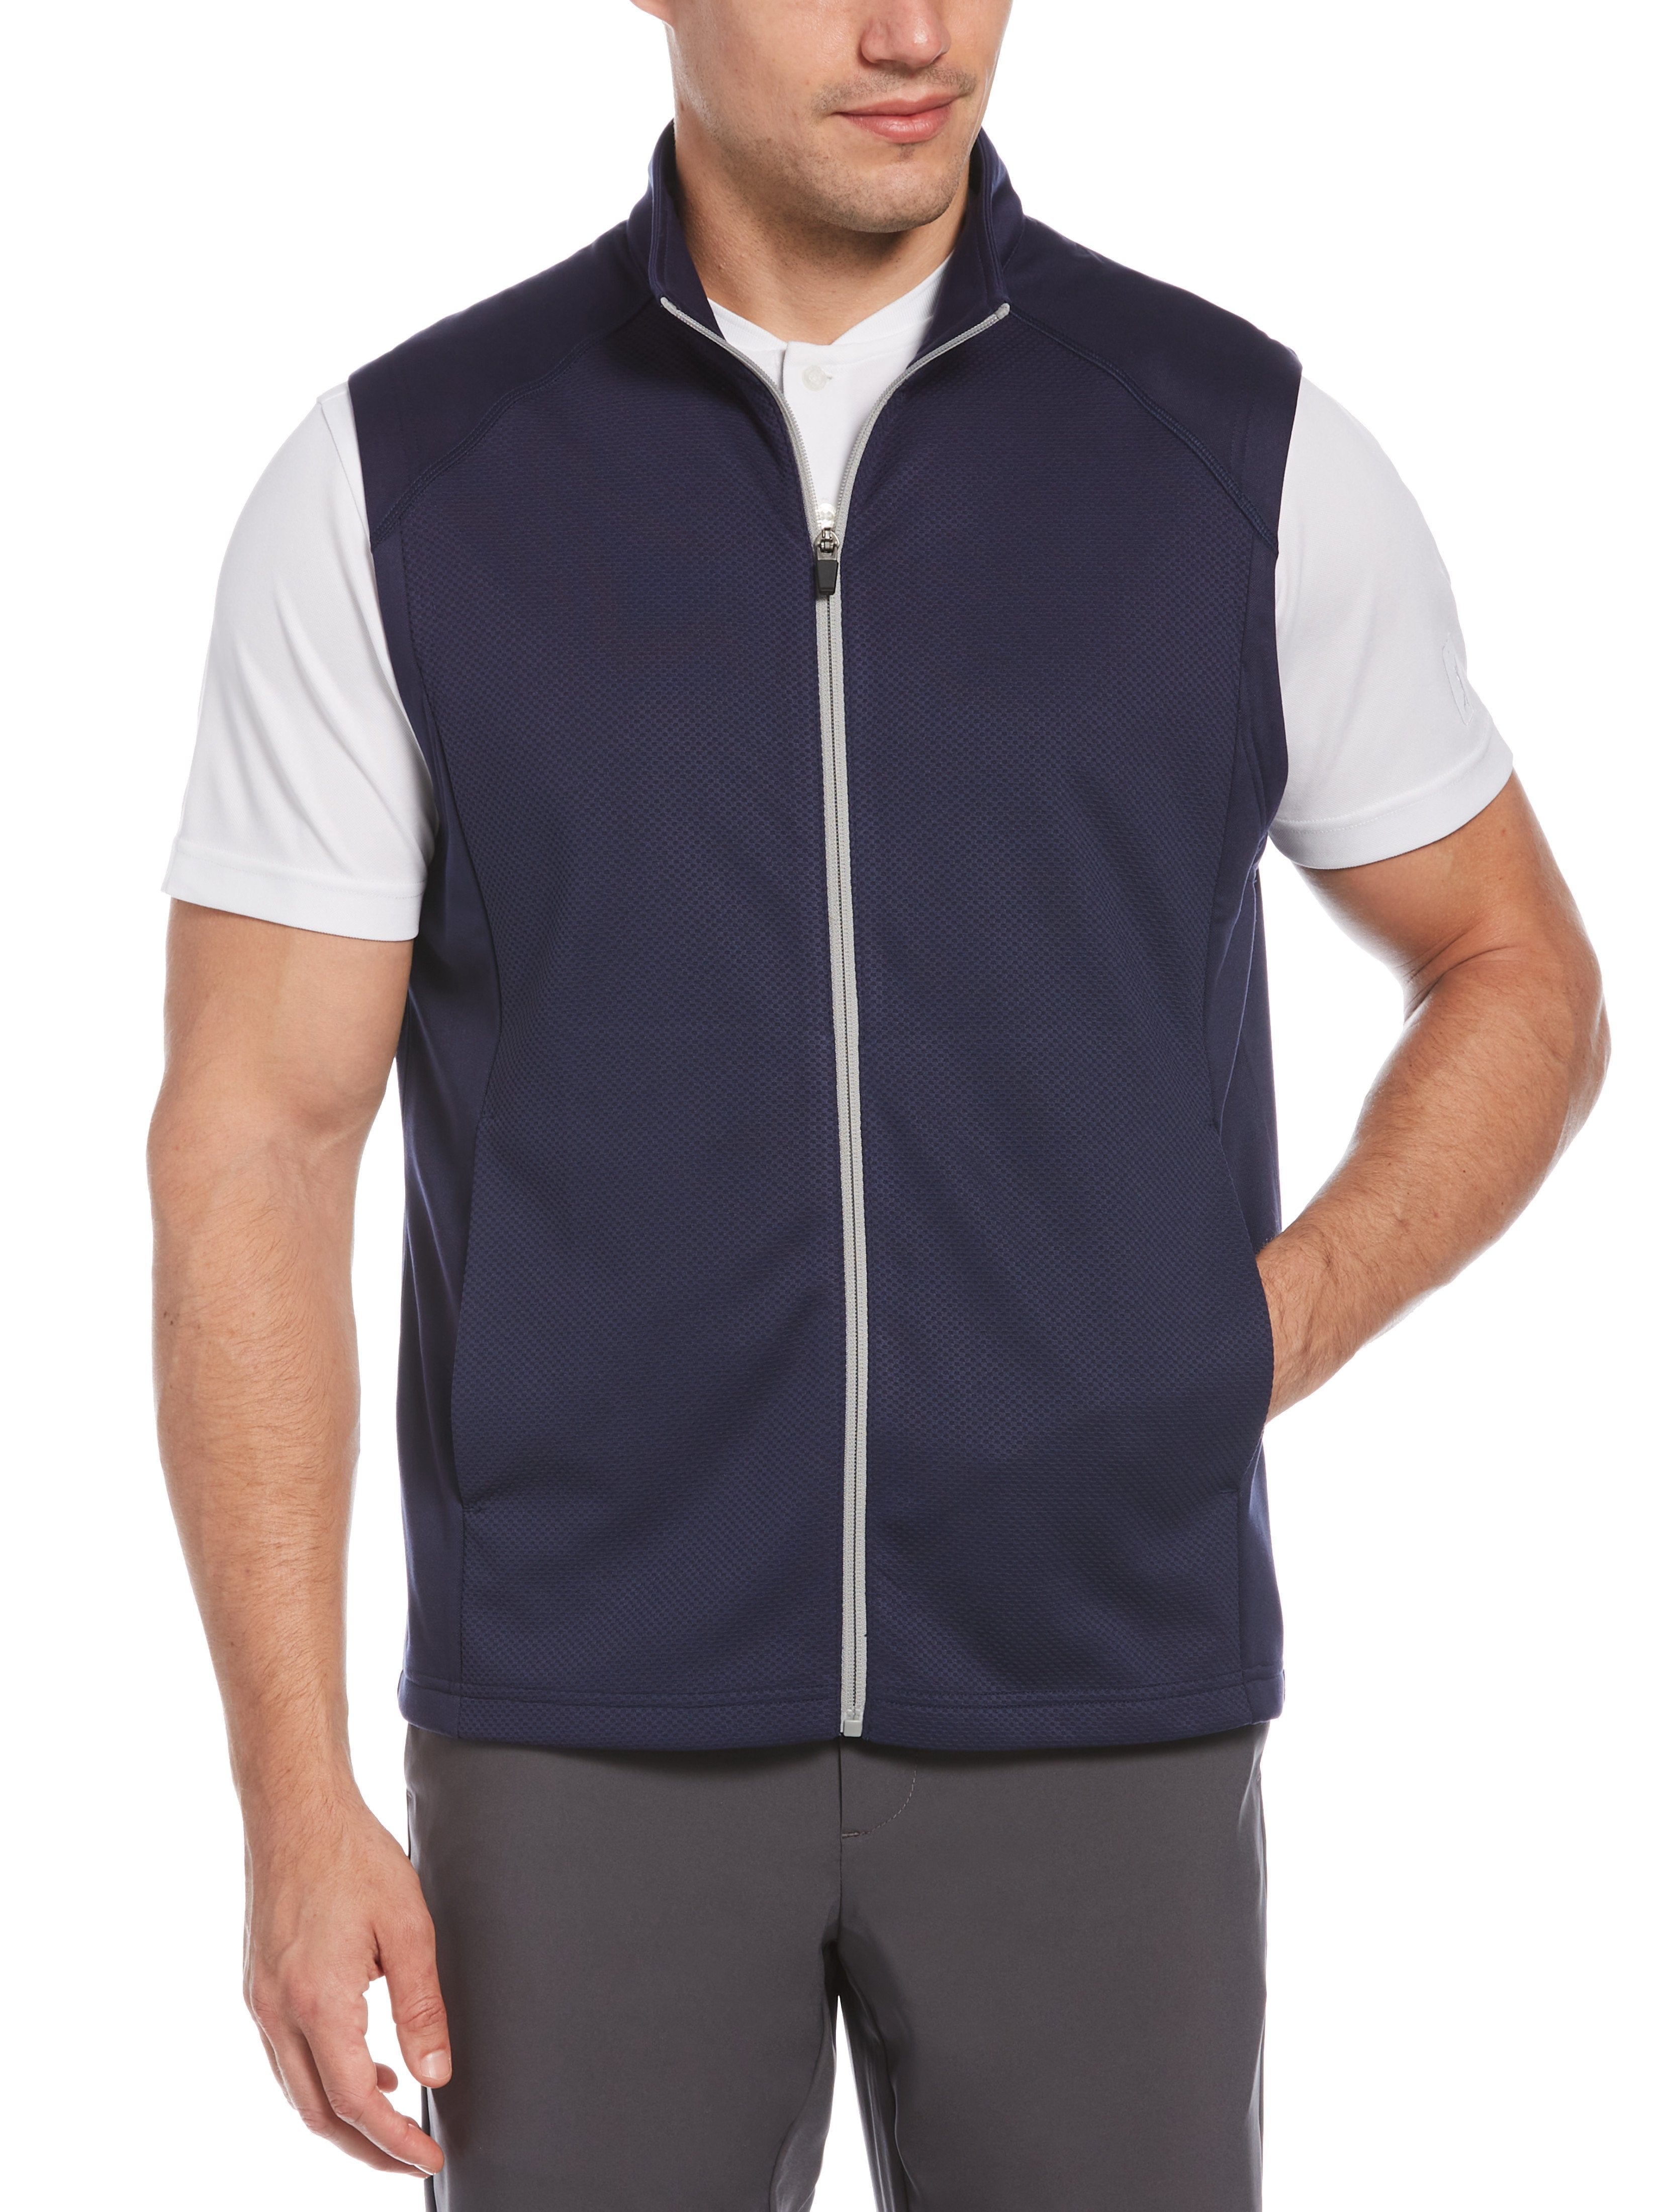 PGA TOUR Apparel Mens Mixed Texture Fleece Golf Vest Top, Size Small, Navy Blue, 100% Polyester | Golf Apparel Shop